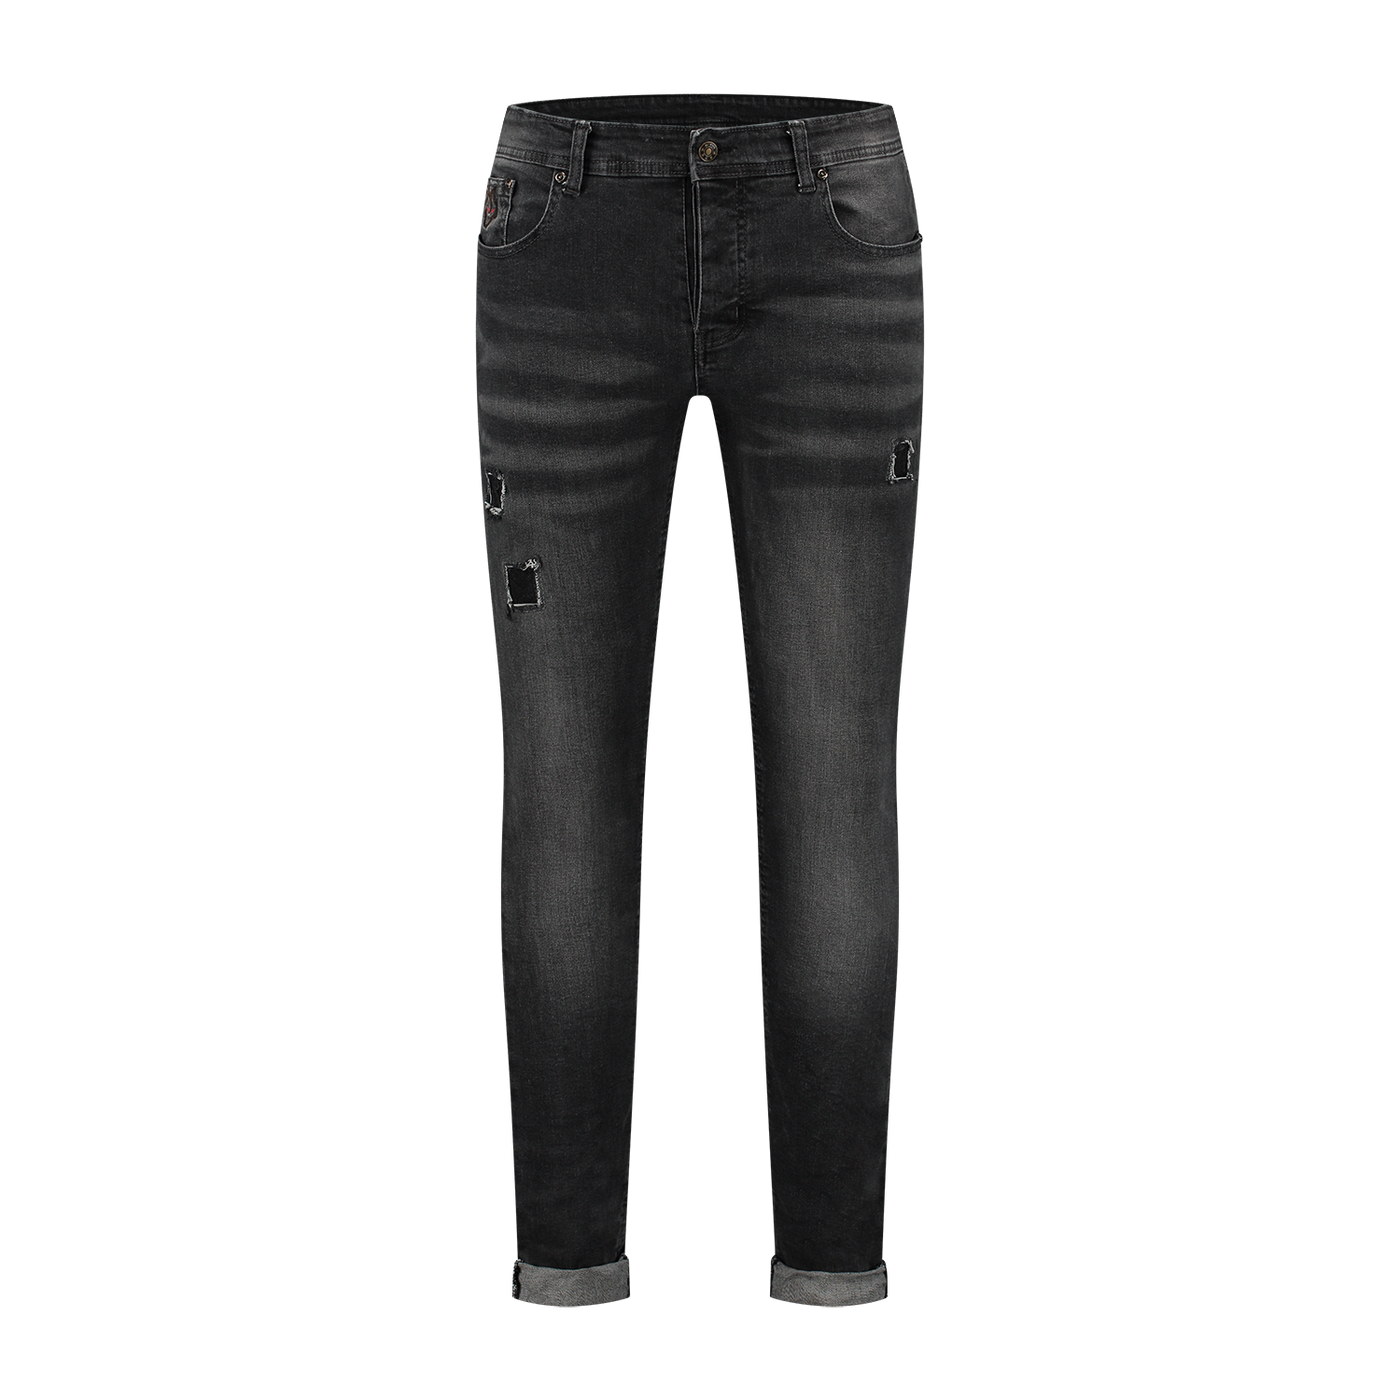 Jeans-Black-Front